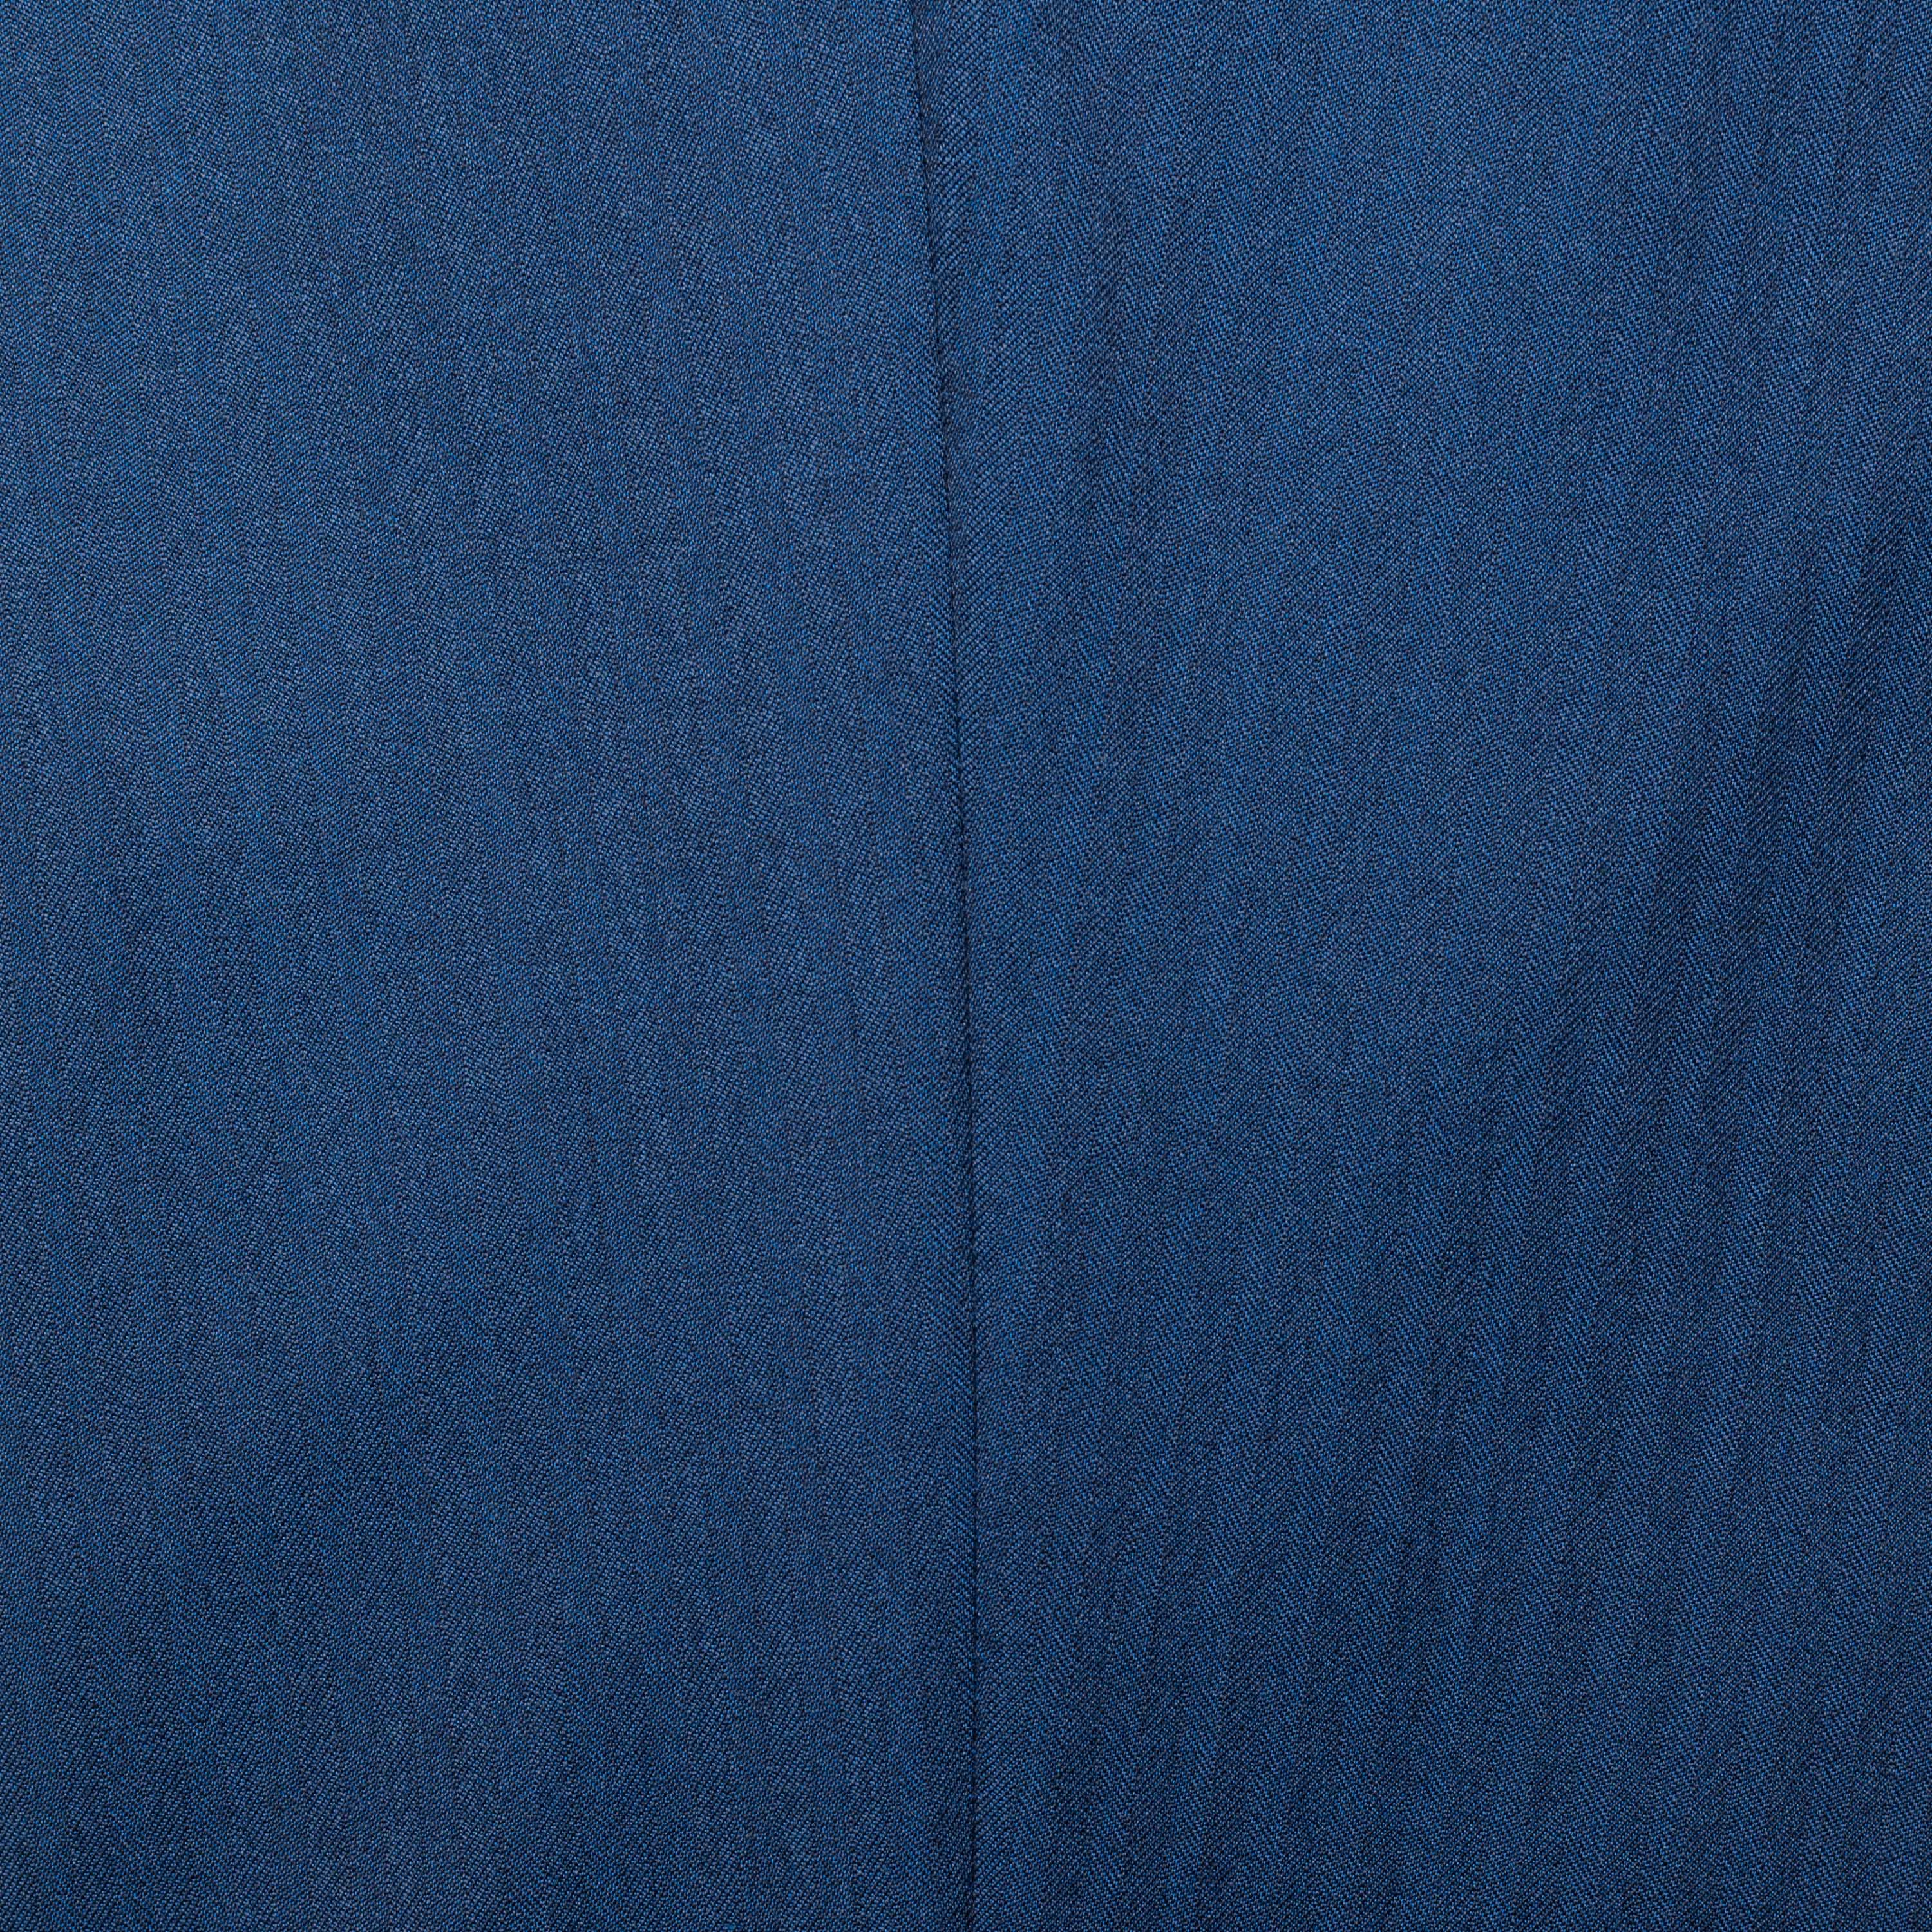 INCOTEX (Slowear) Blue Herringbone Wool Flat Front Pants NEW Slim Fit INCOTEX